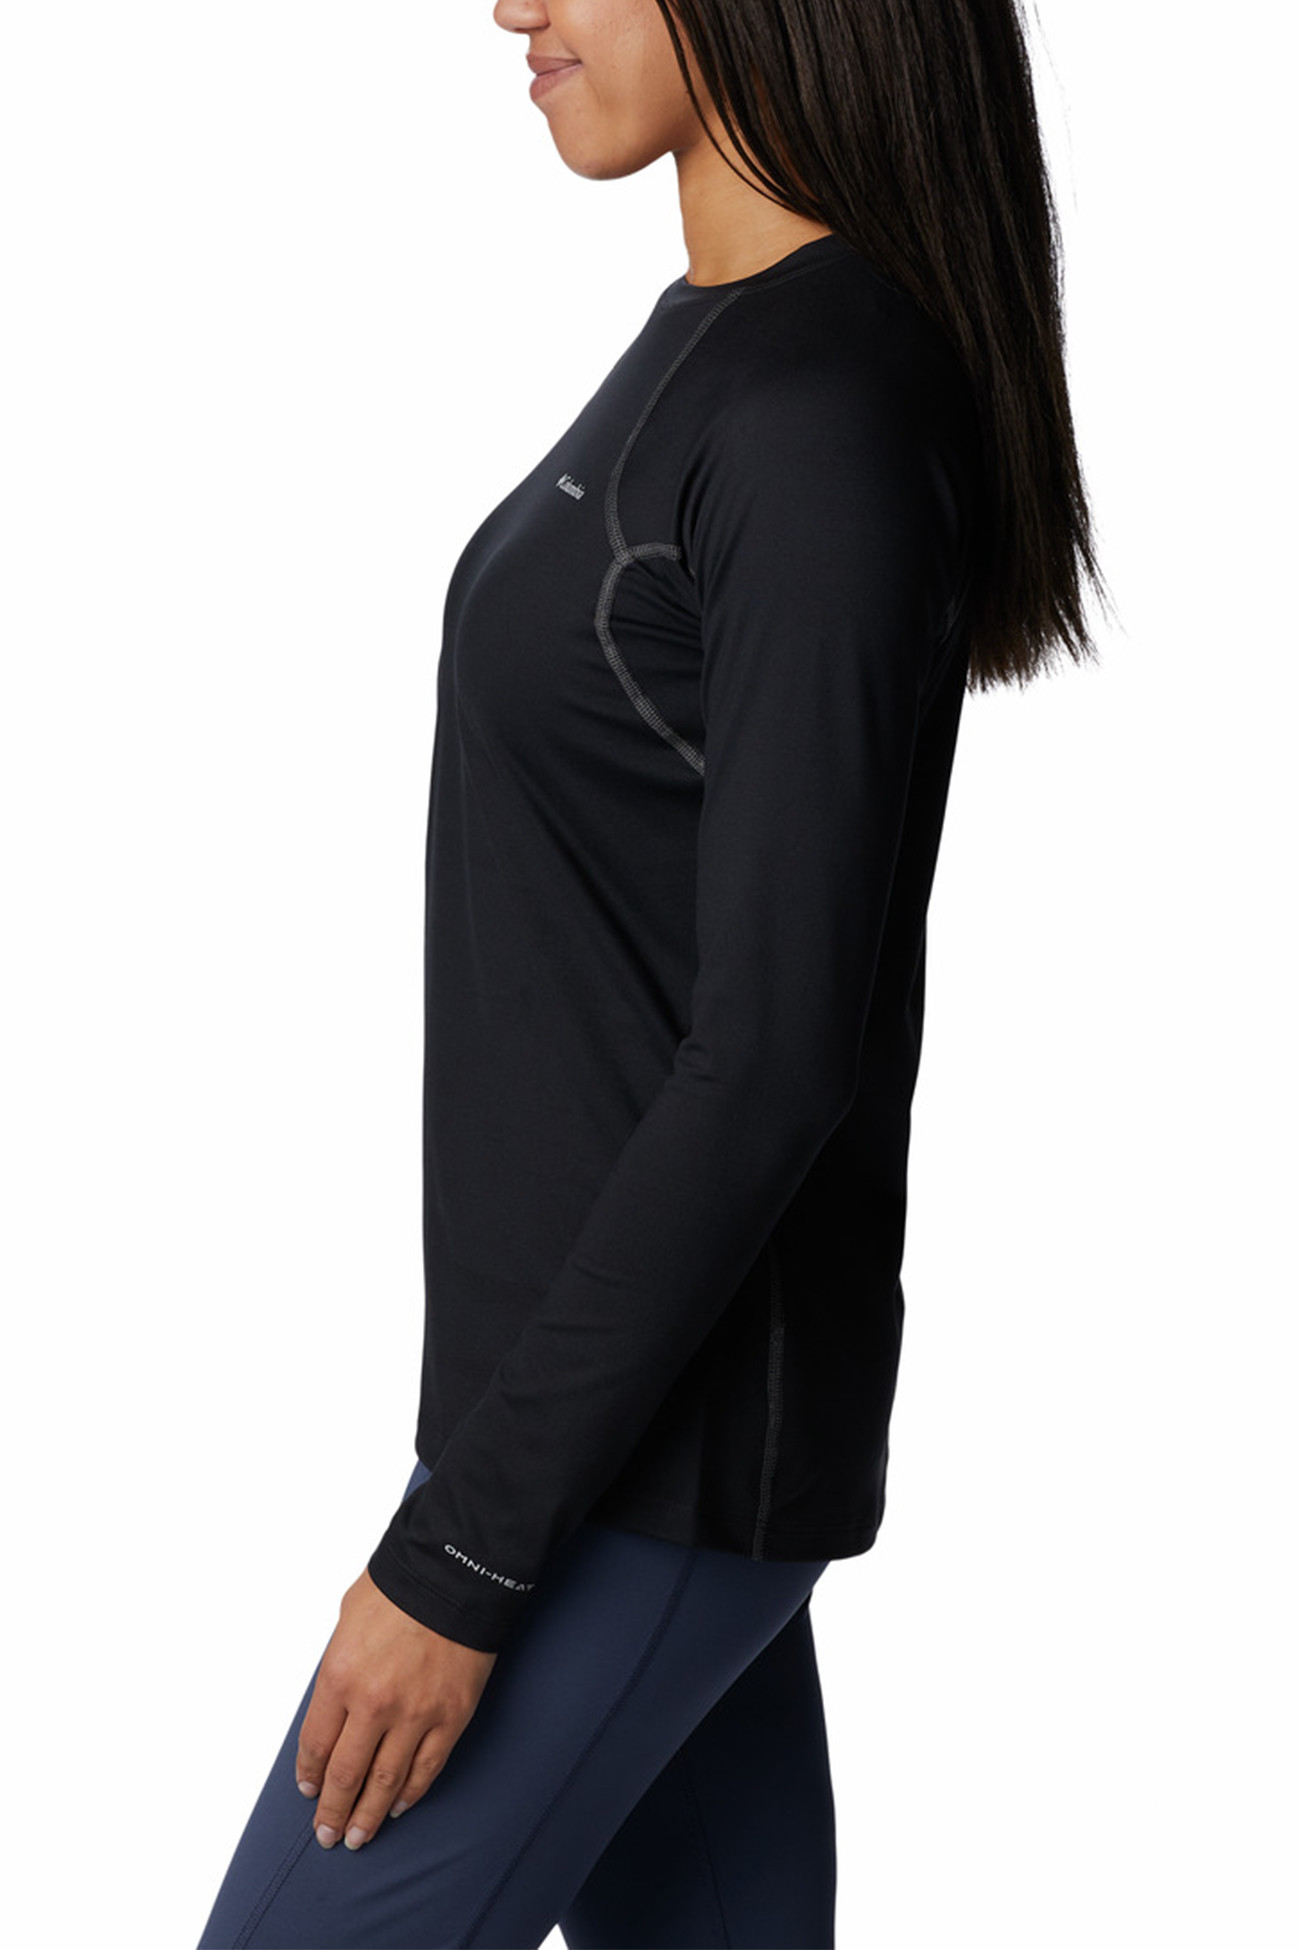 Термобілизна жіноча Columbia Heavyweight Stretch Long Sleeve Top чорна 1638991-011 изображение 2